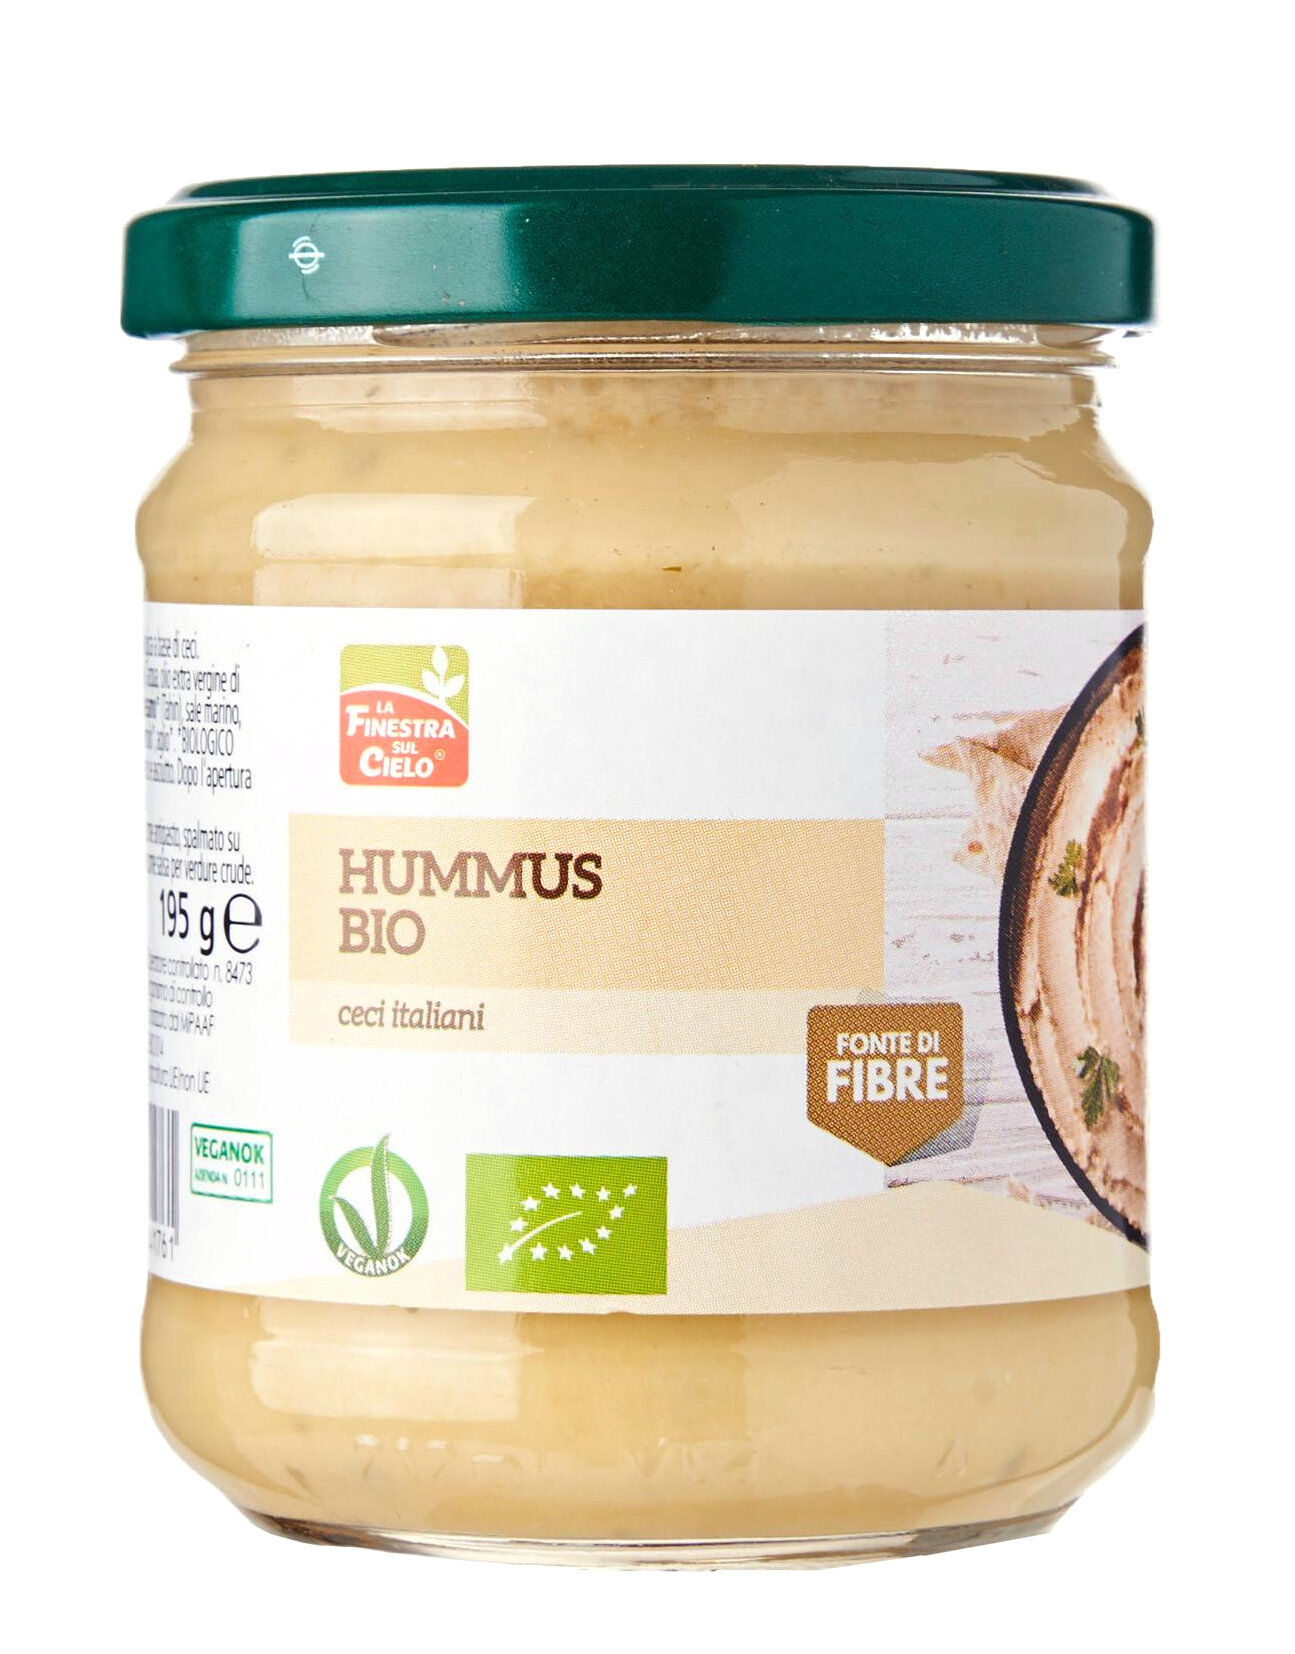 LA FINESTRA SUL CIELO Hummus Bio 195 Grammi